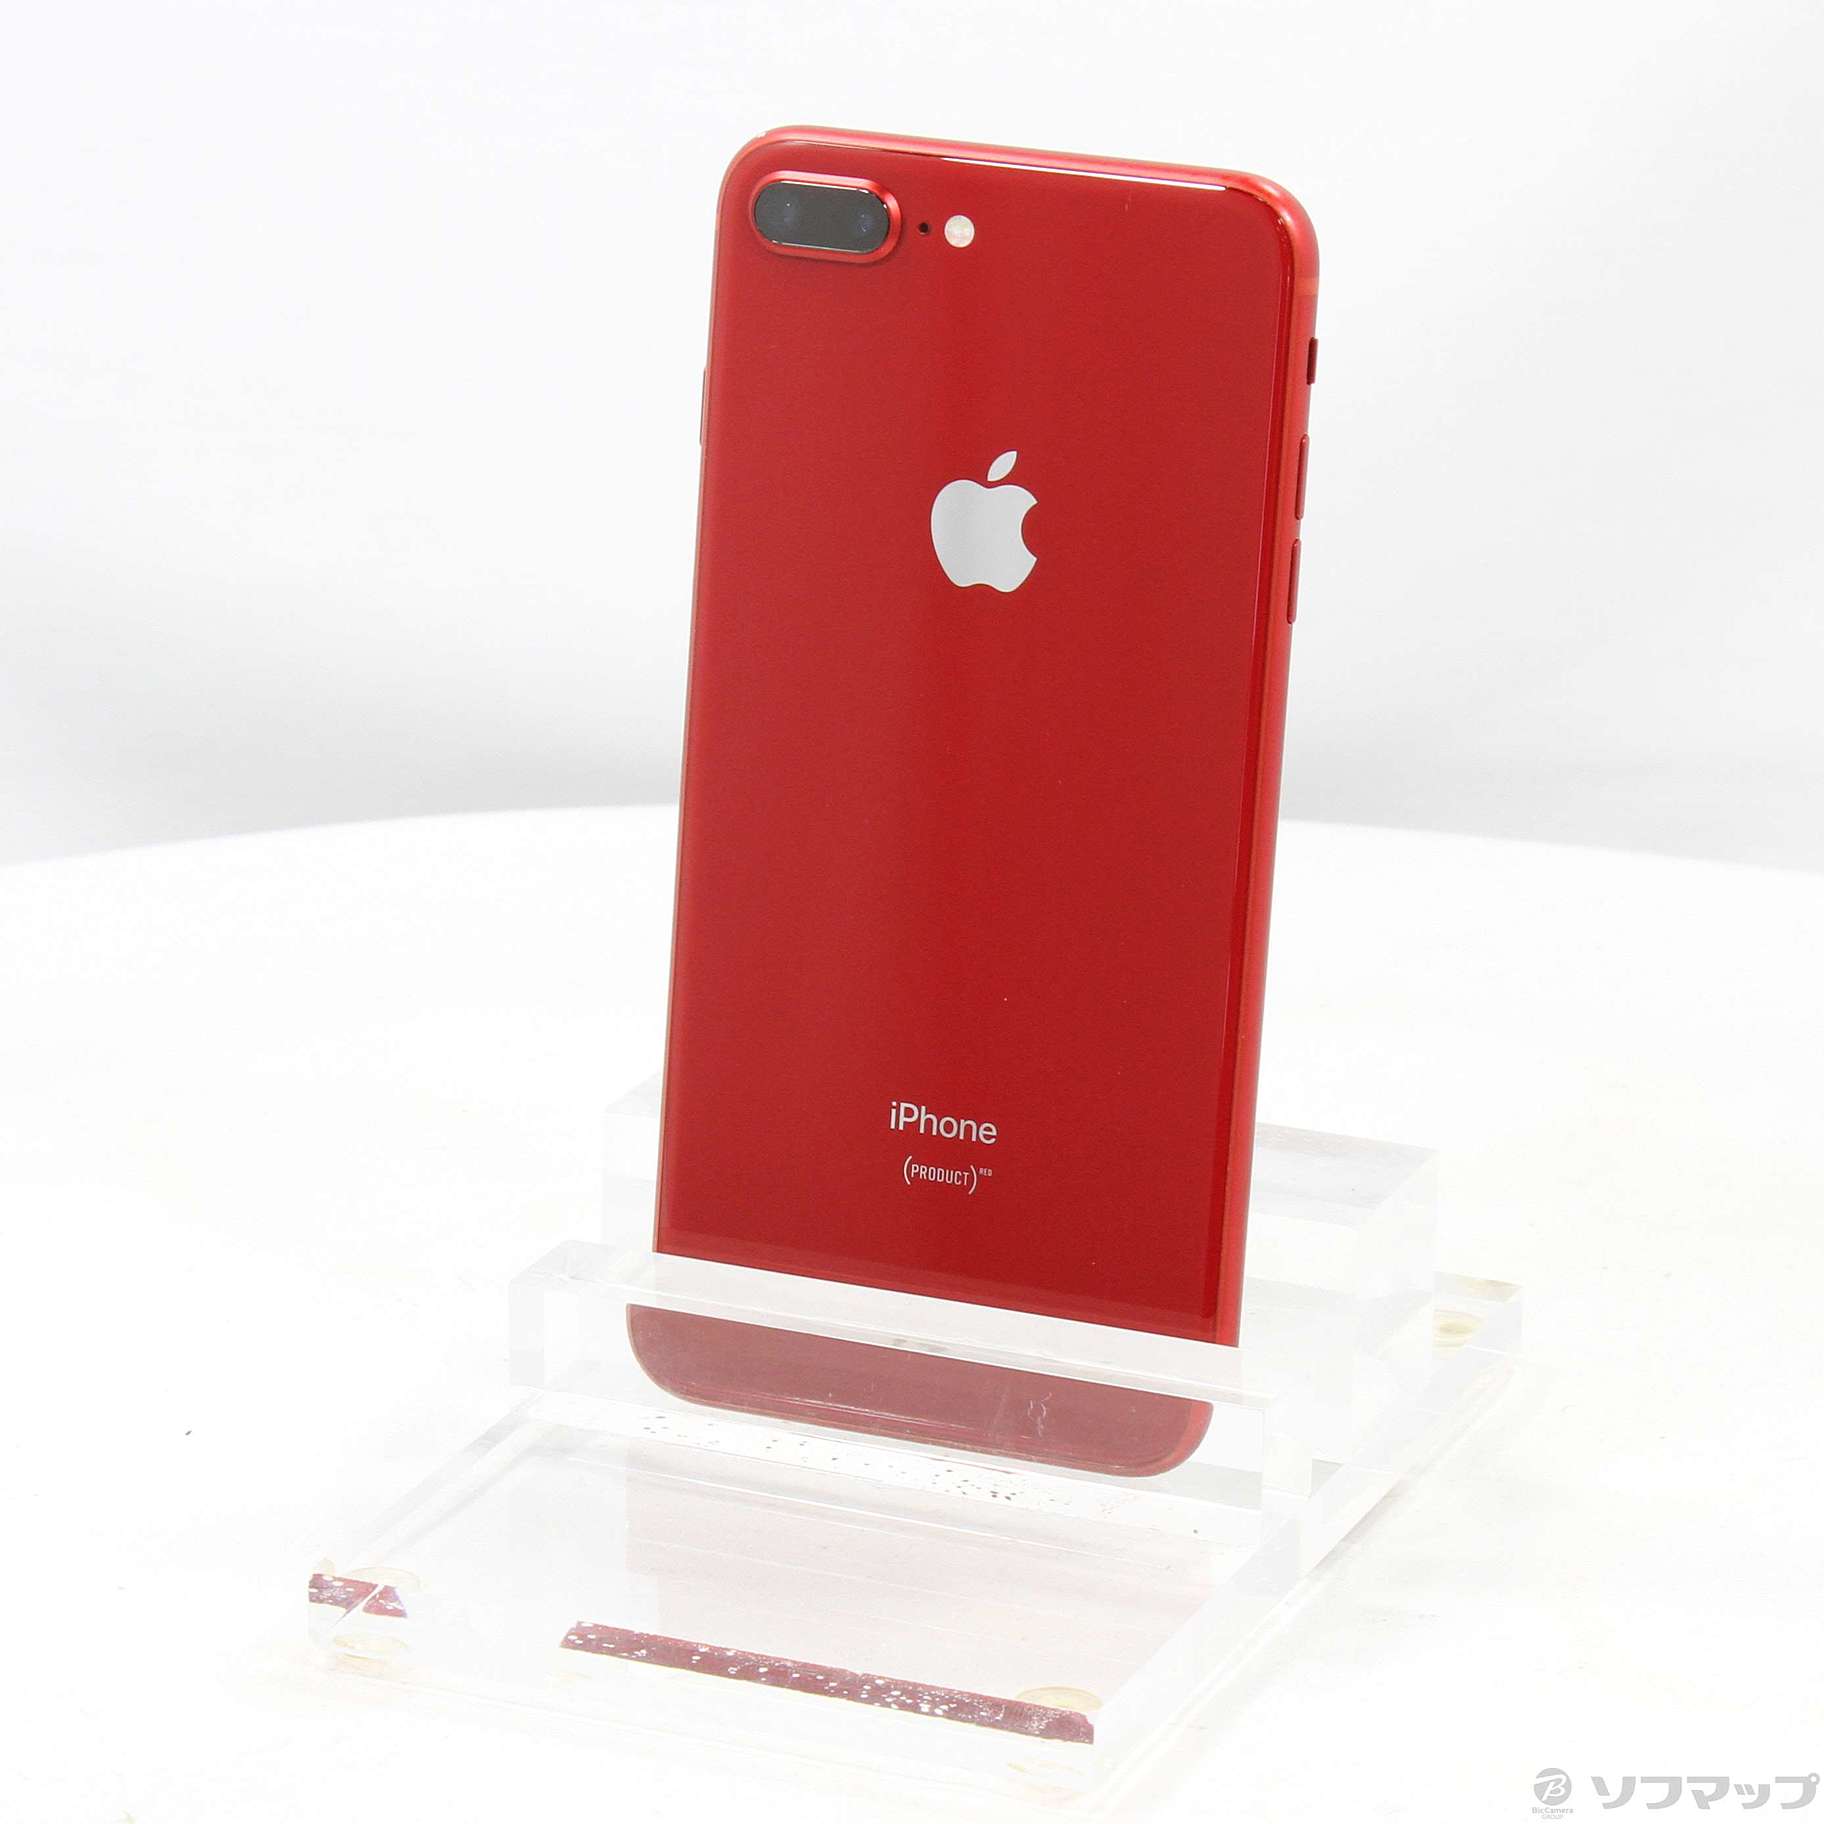 iPhone 8 Plus プロダクトレッド 64 GB SIMフリー